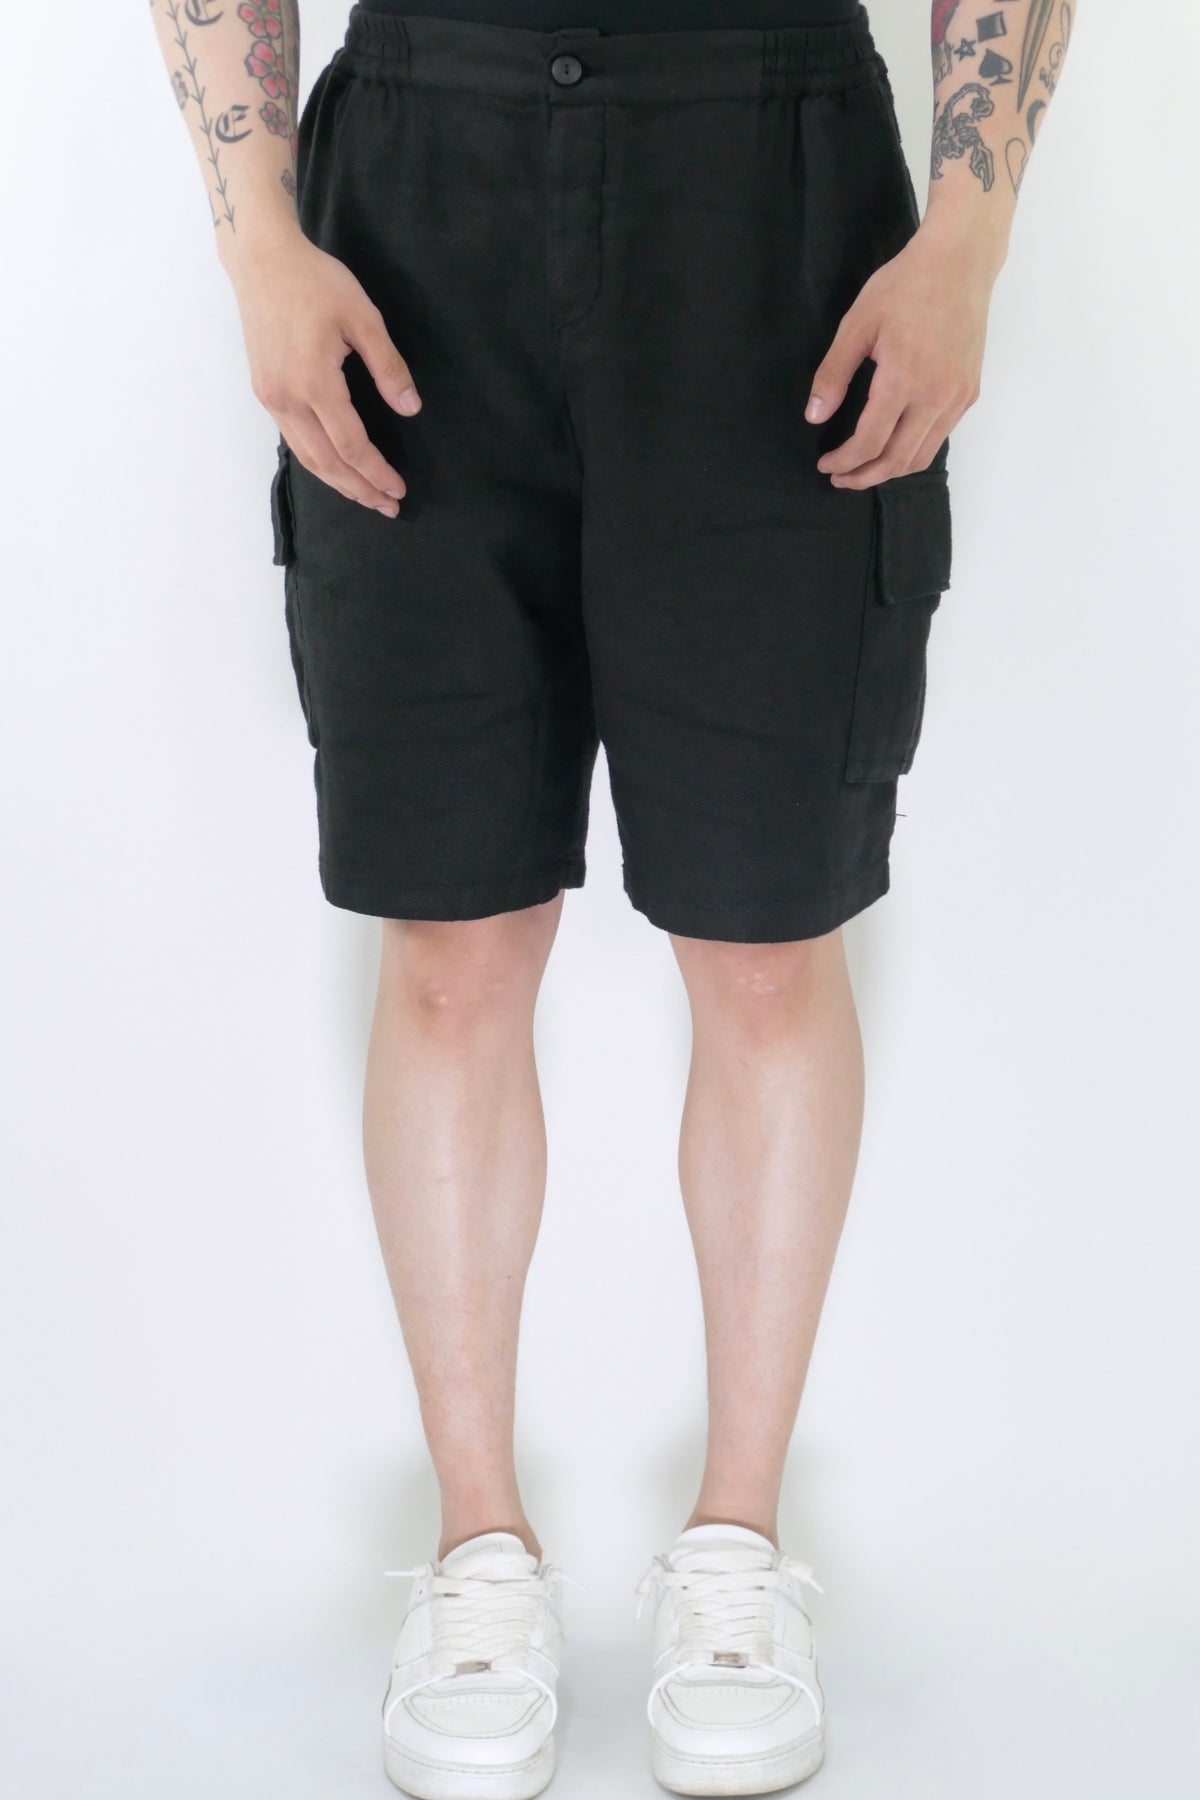 Athoa Bermuda Cargo Shorts - Black